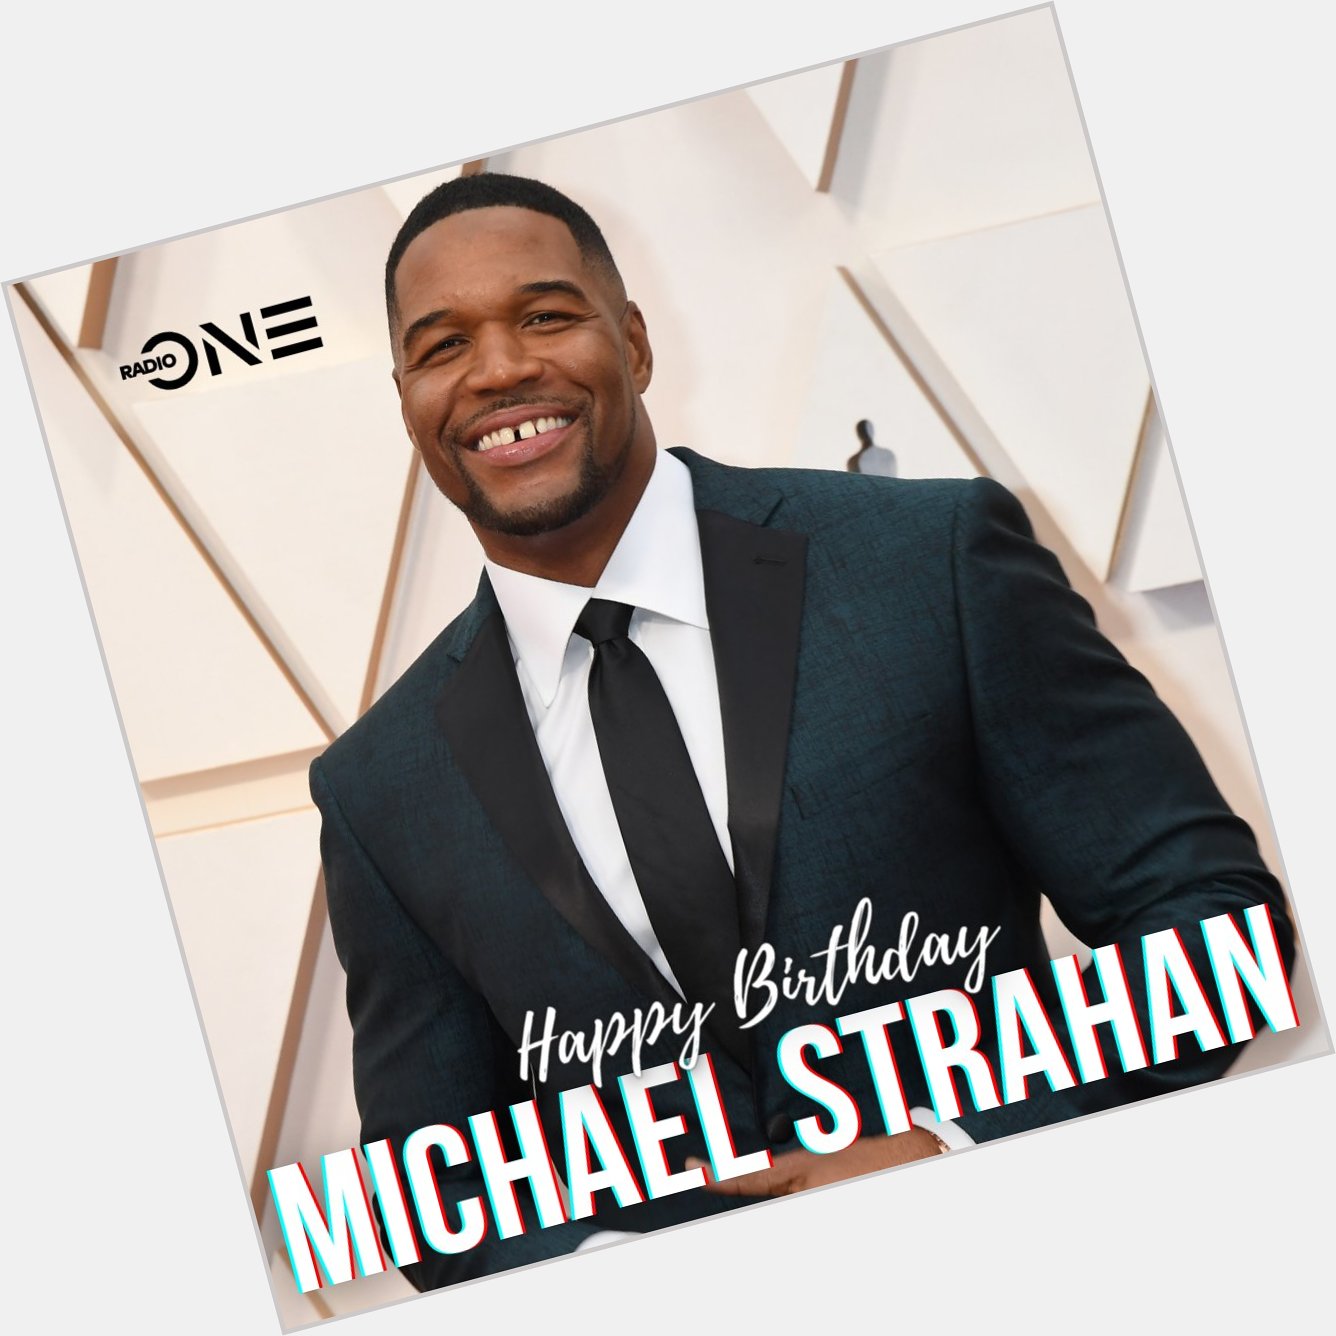 Happy birthday Michael Strahan! 